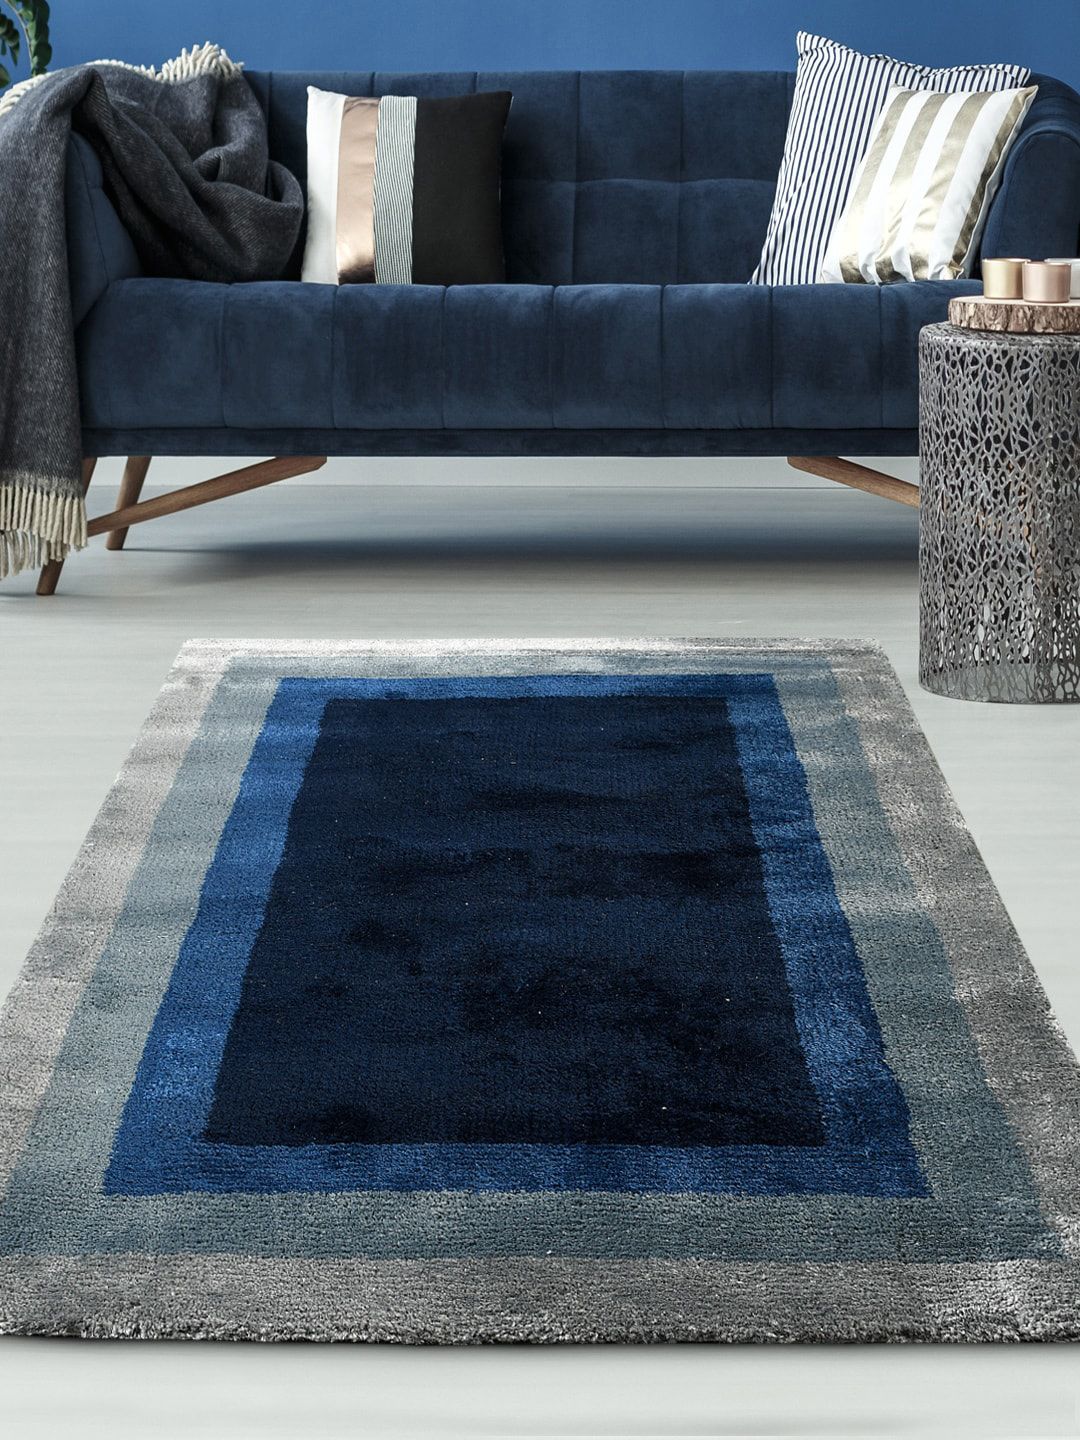 Saral Home Grey & Navy Blue Printed Cotton Rectangular Carpet Price in India